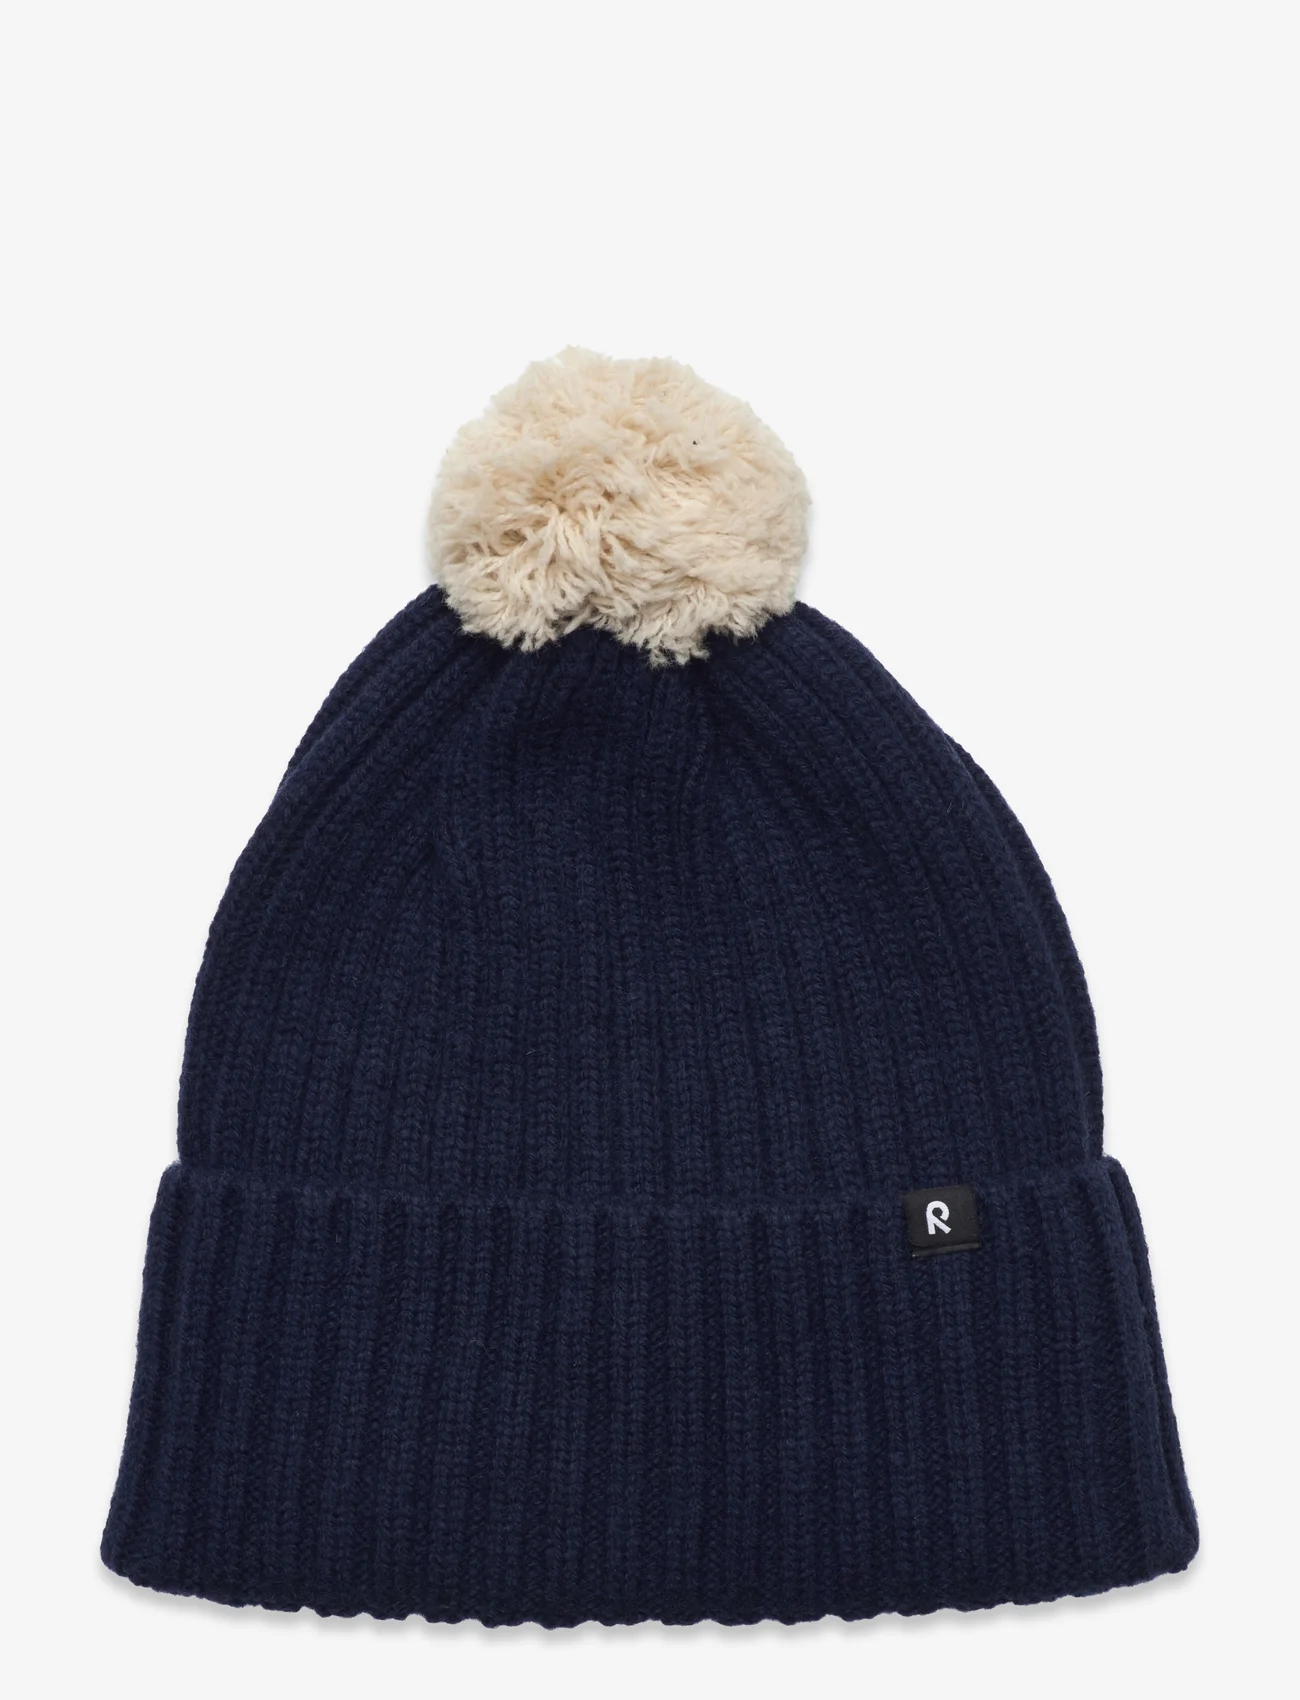 Reima - Beanie, Topsu - winter hats - navy - 0